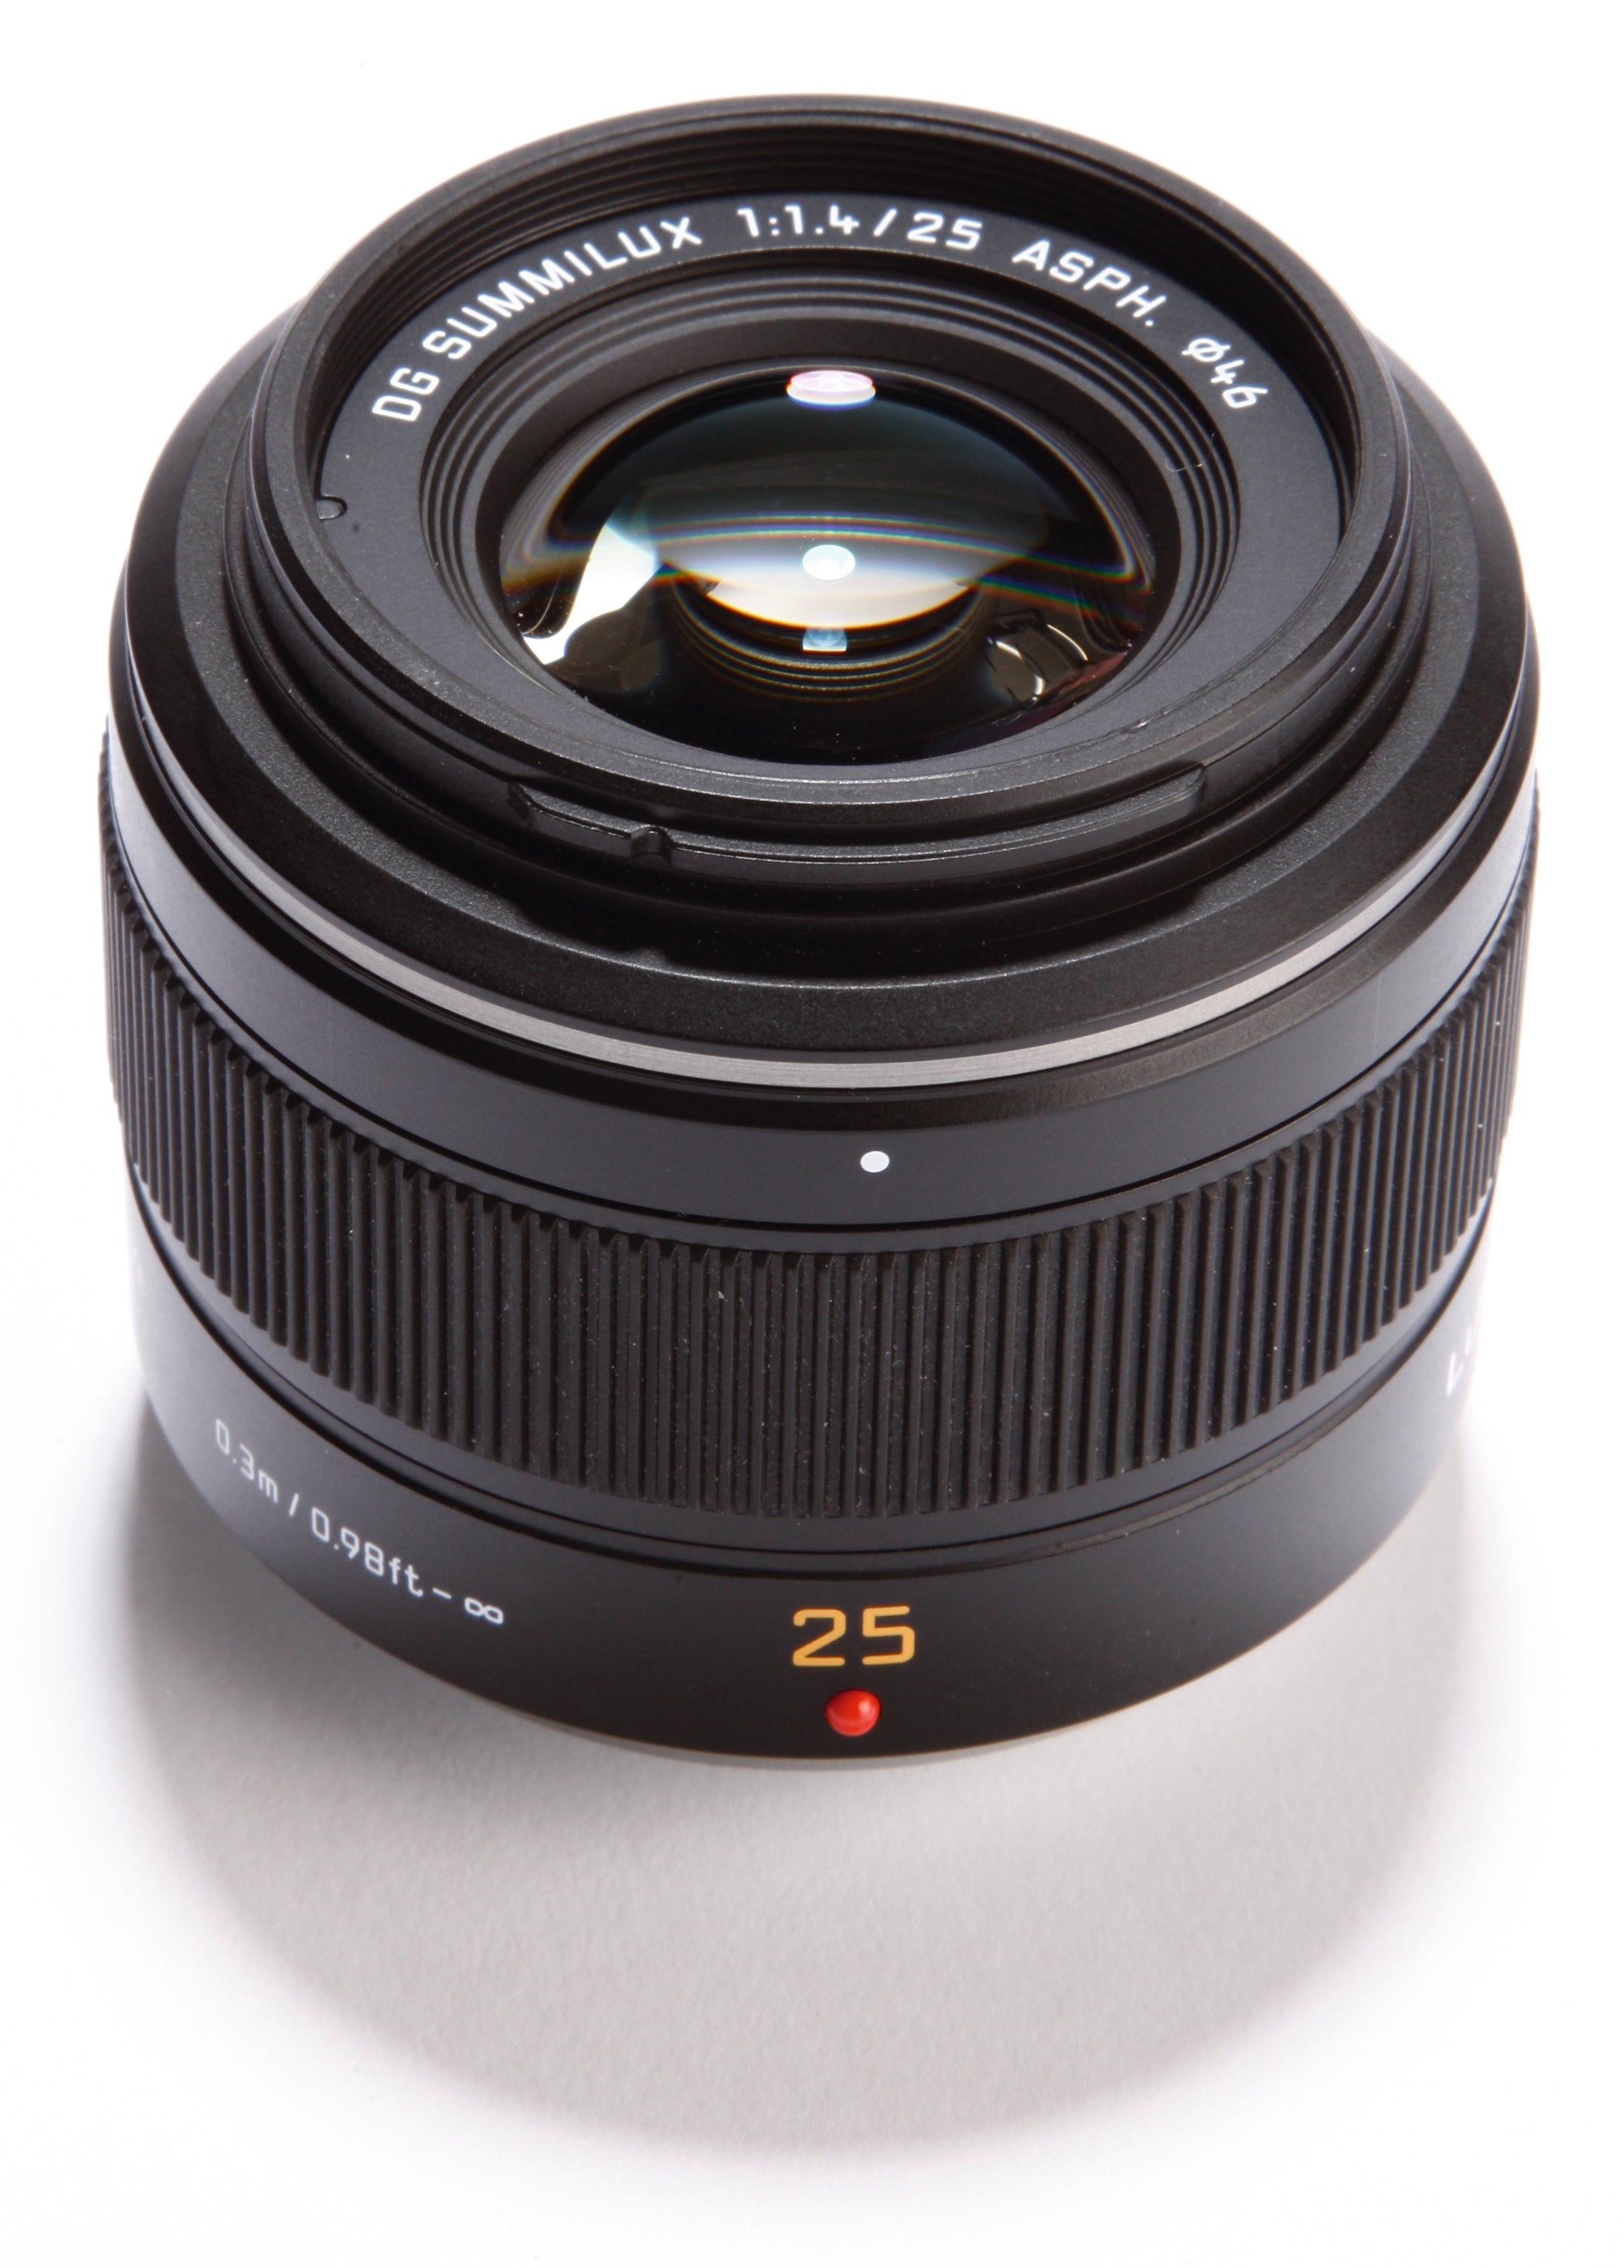 Panasonic Leica DG Summilux 25mm f/1.4 ASPH Lens Review